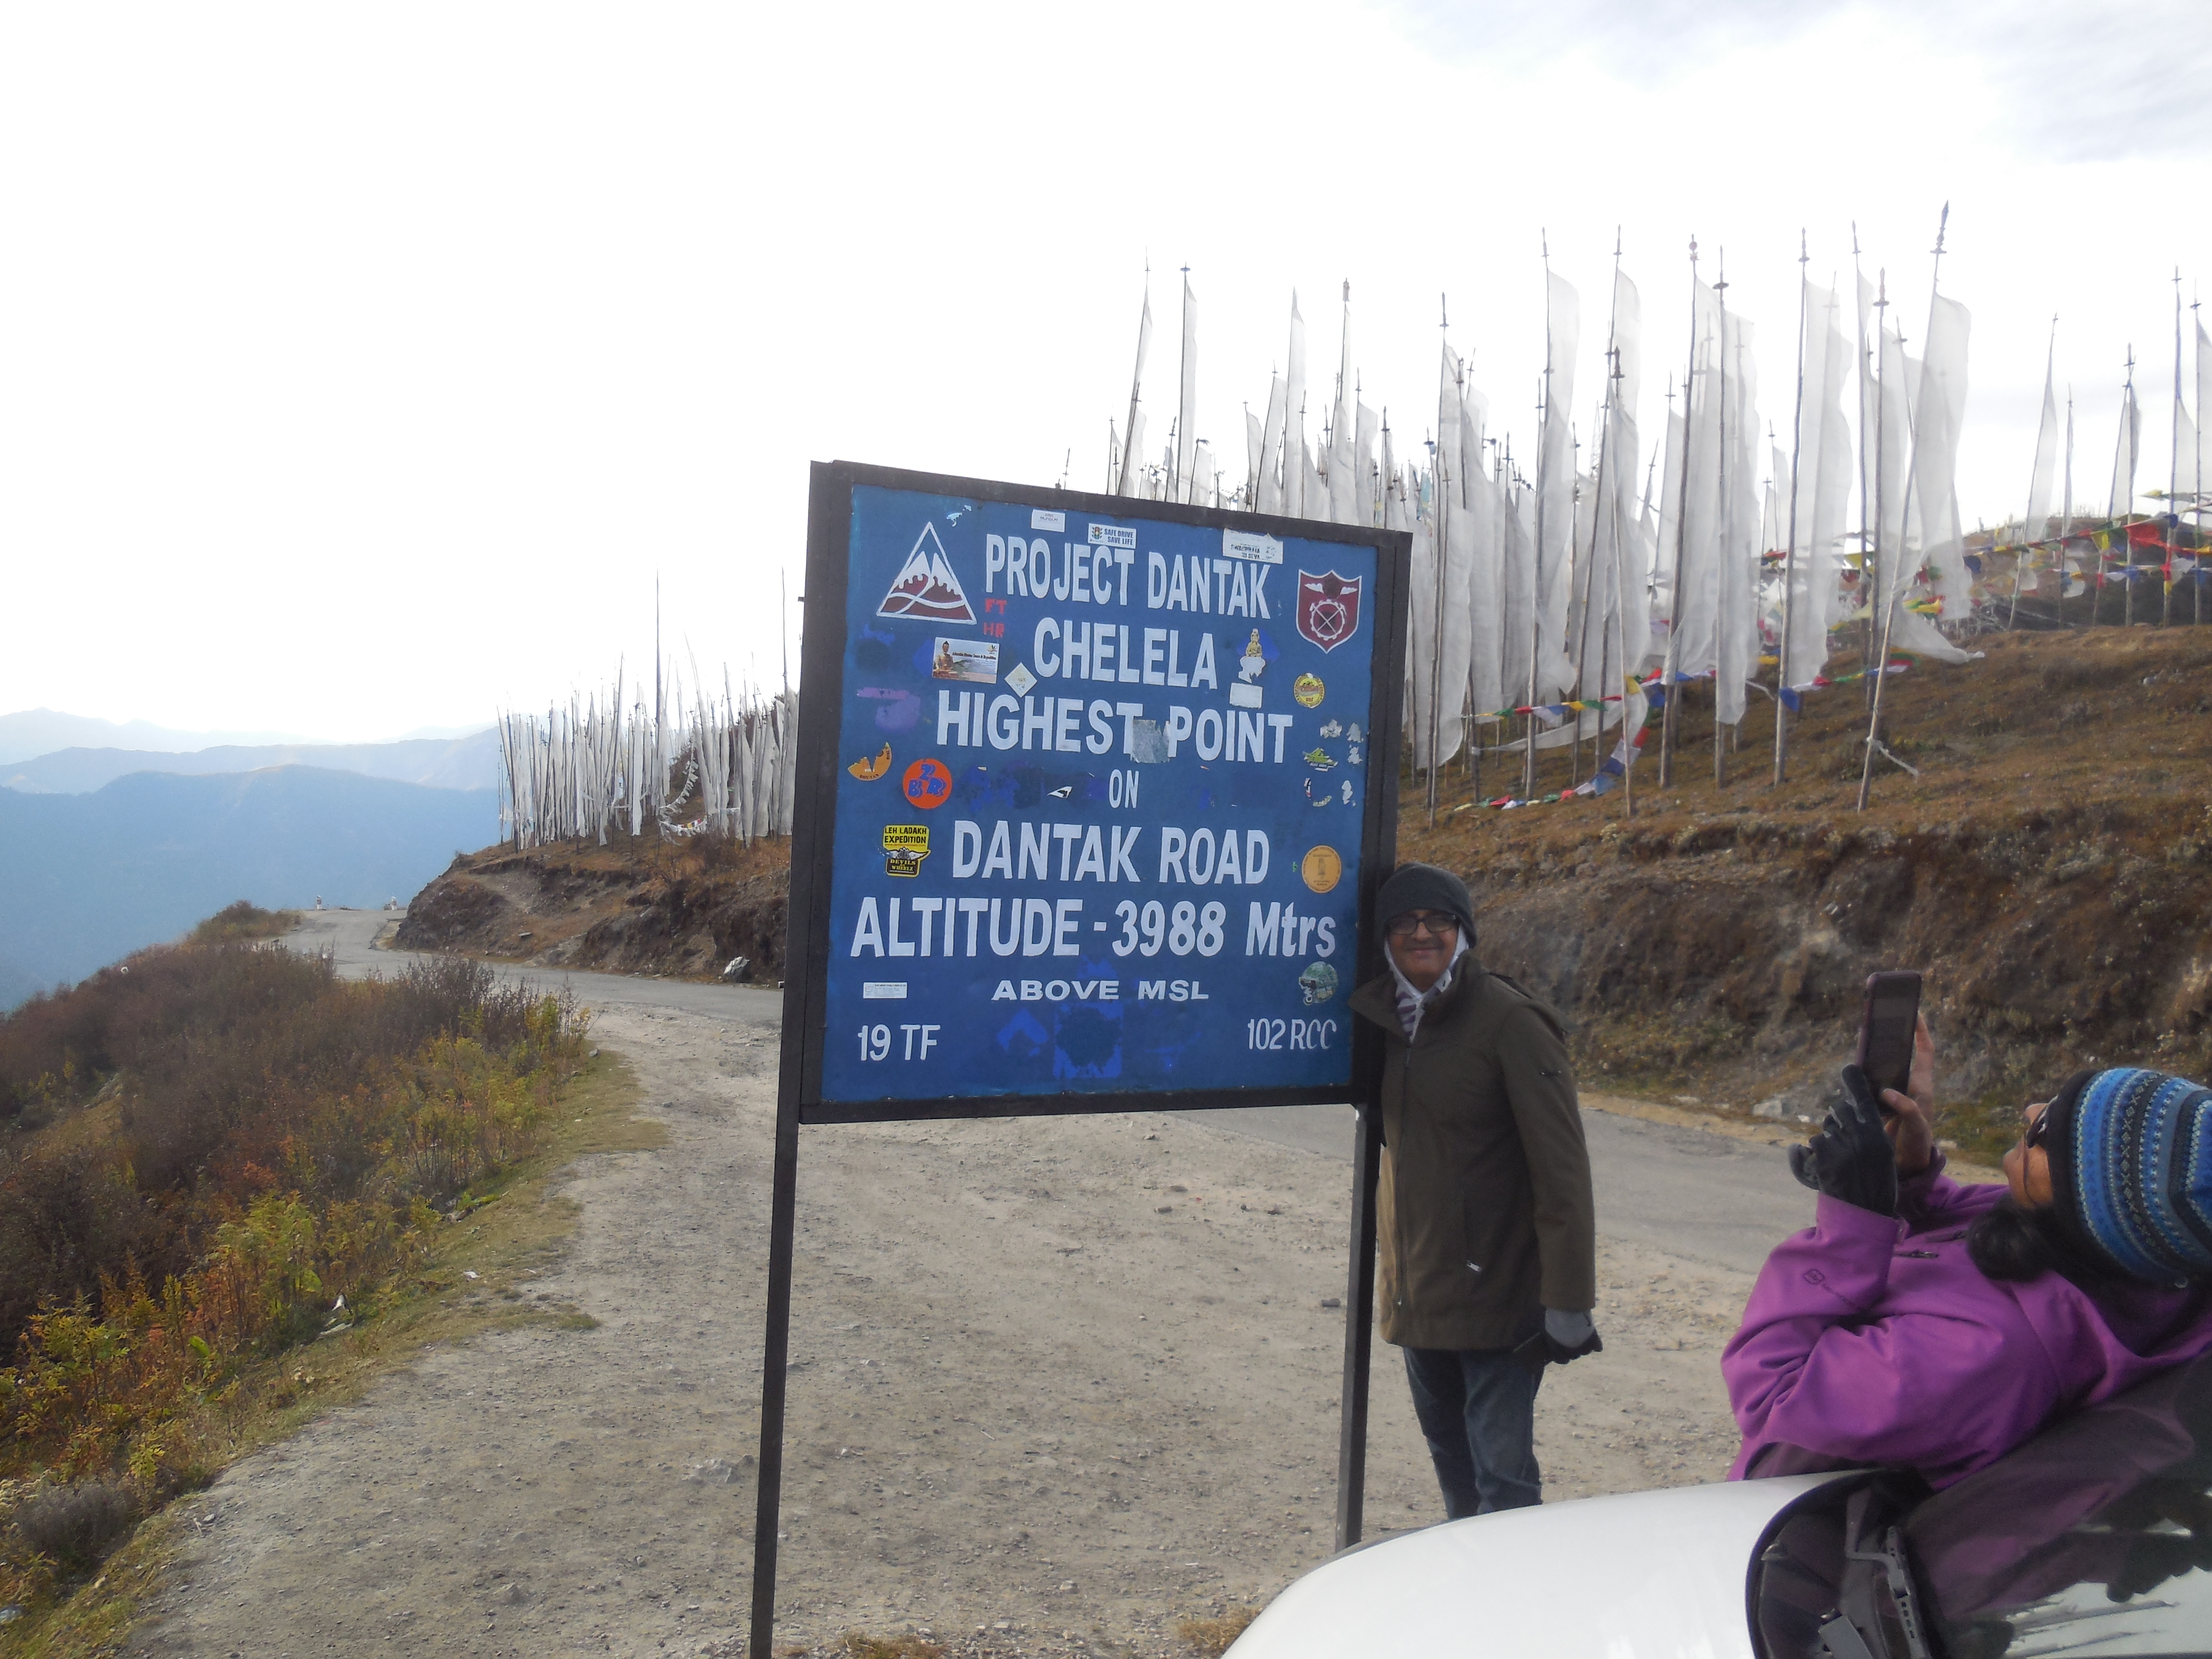 Chele La Pass Bhutan at 3988m